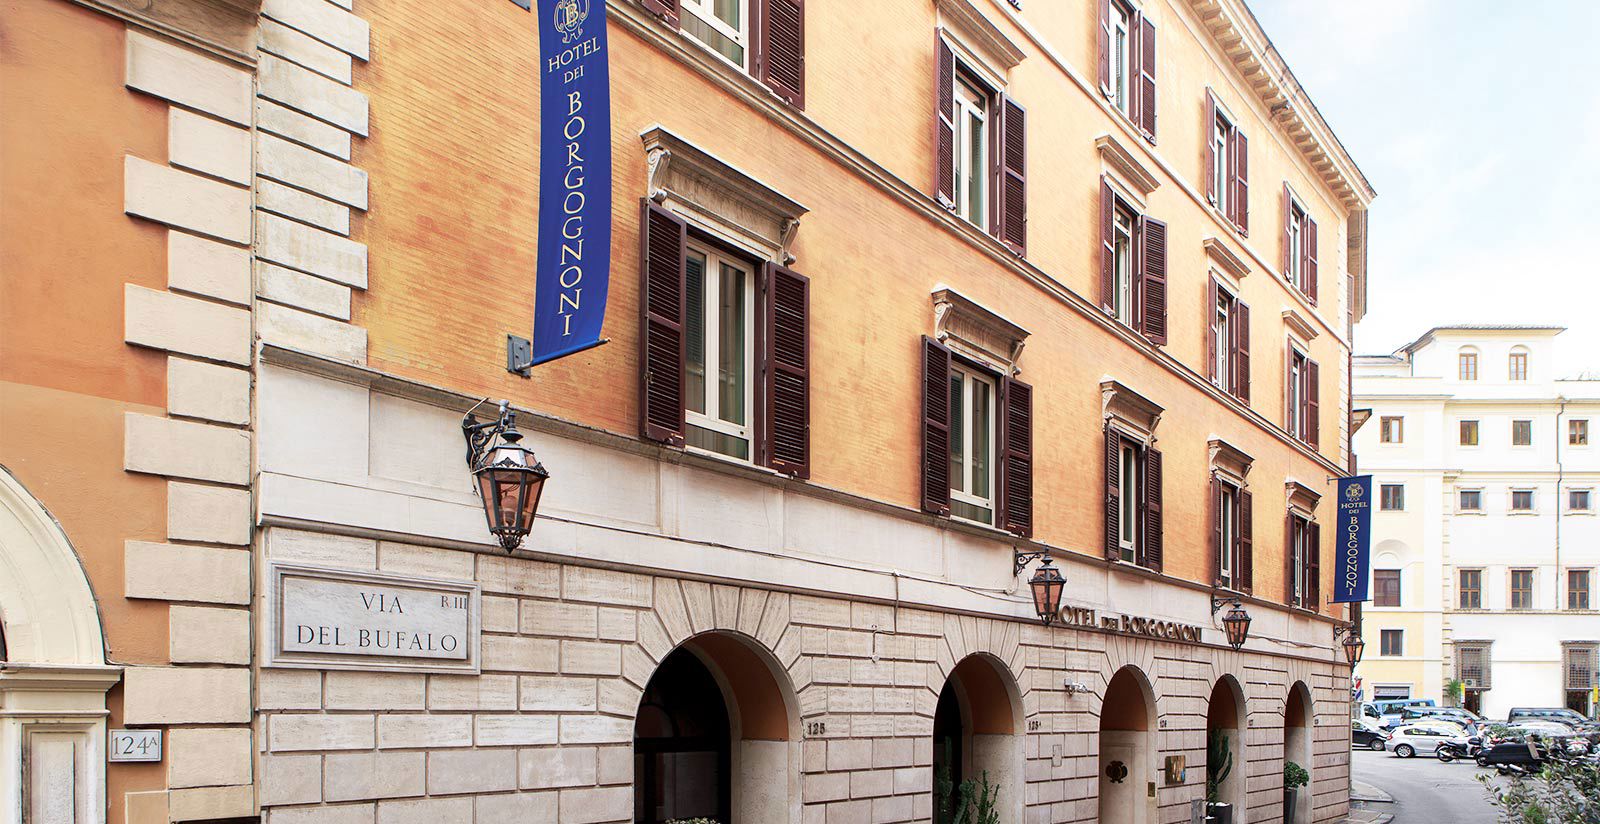 Hotel Borgognoni: Your gateway to excursions in Rome 5